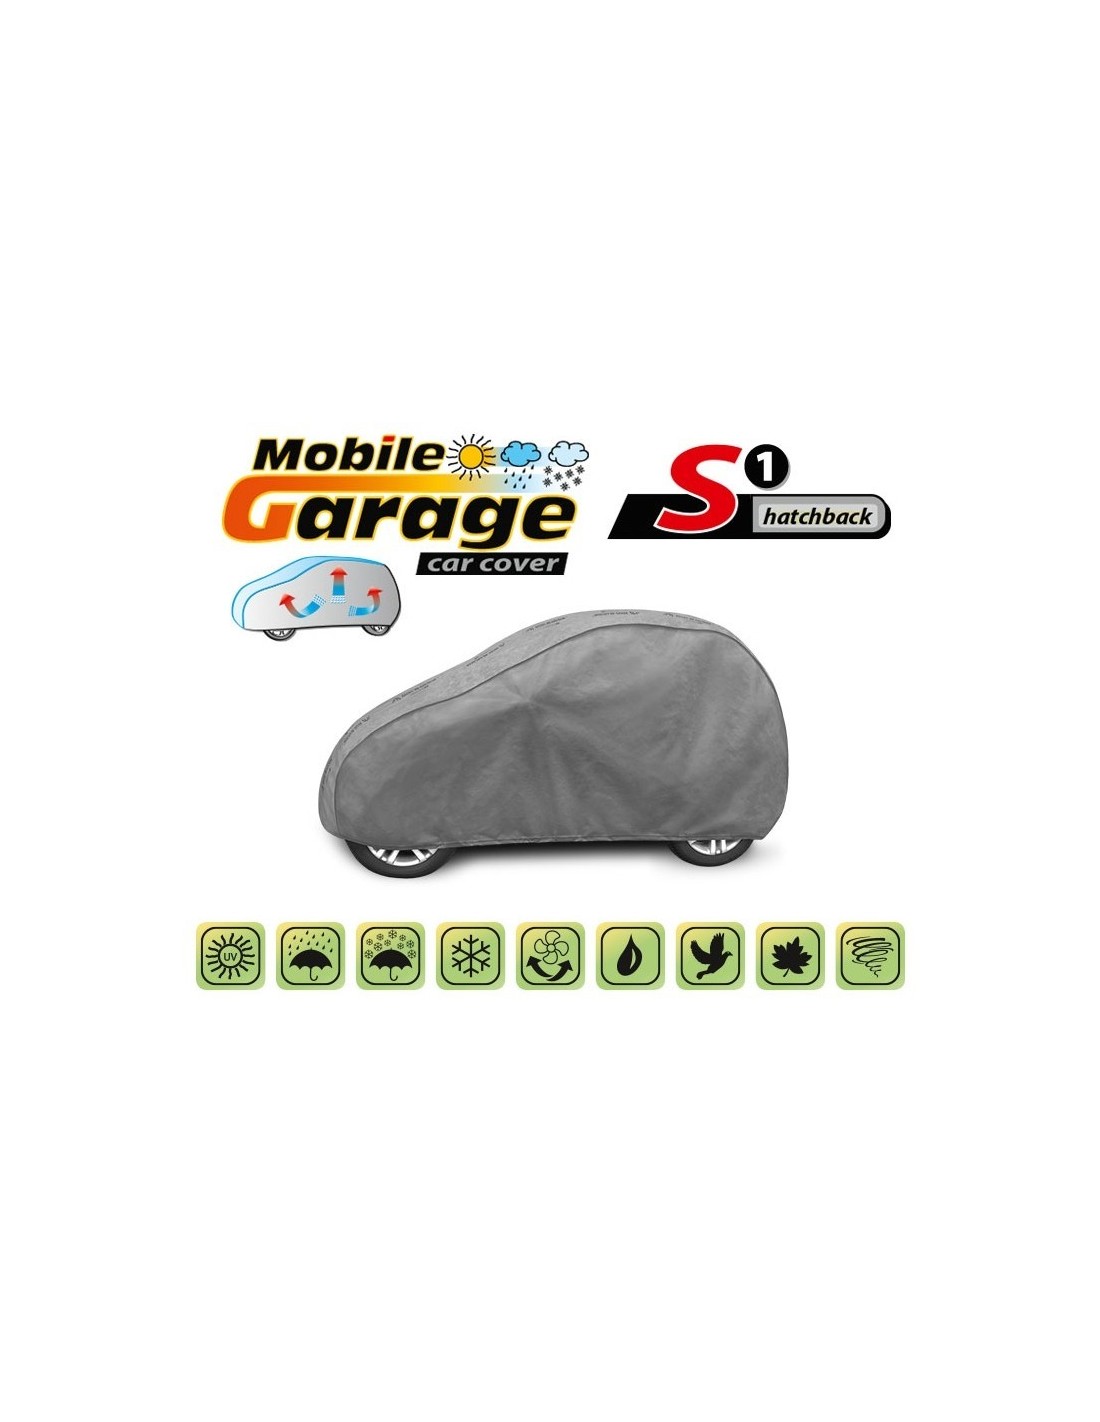 Funda exterior para coche Mobile Garage S1 Hatchback